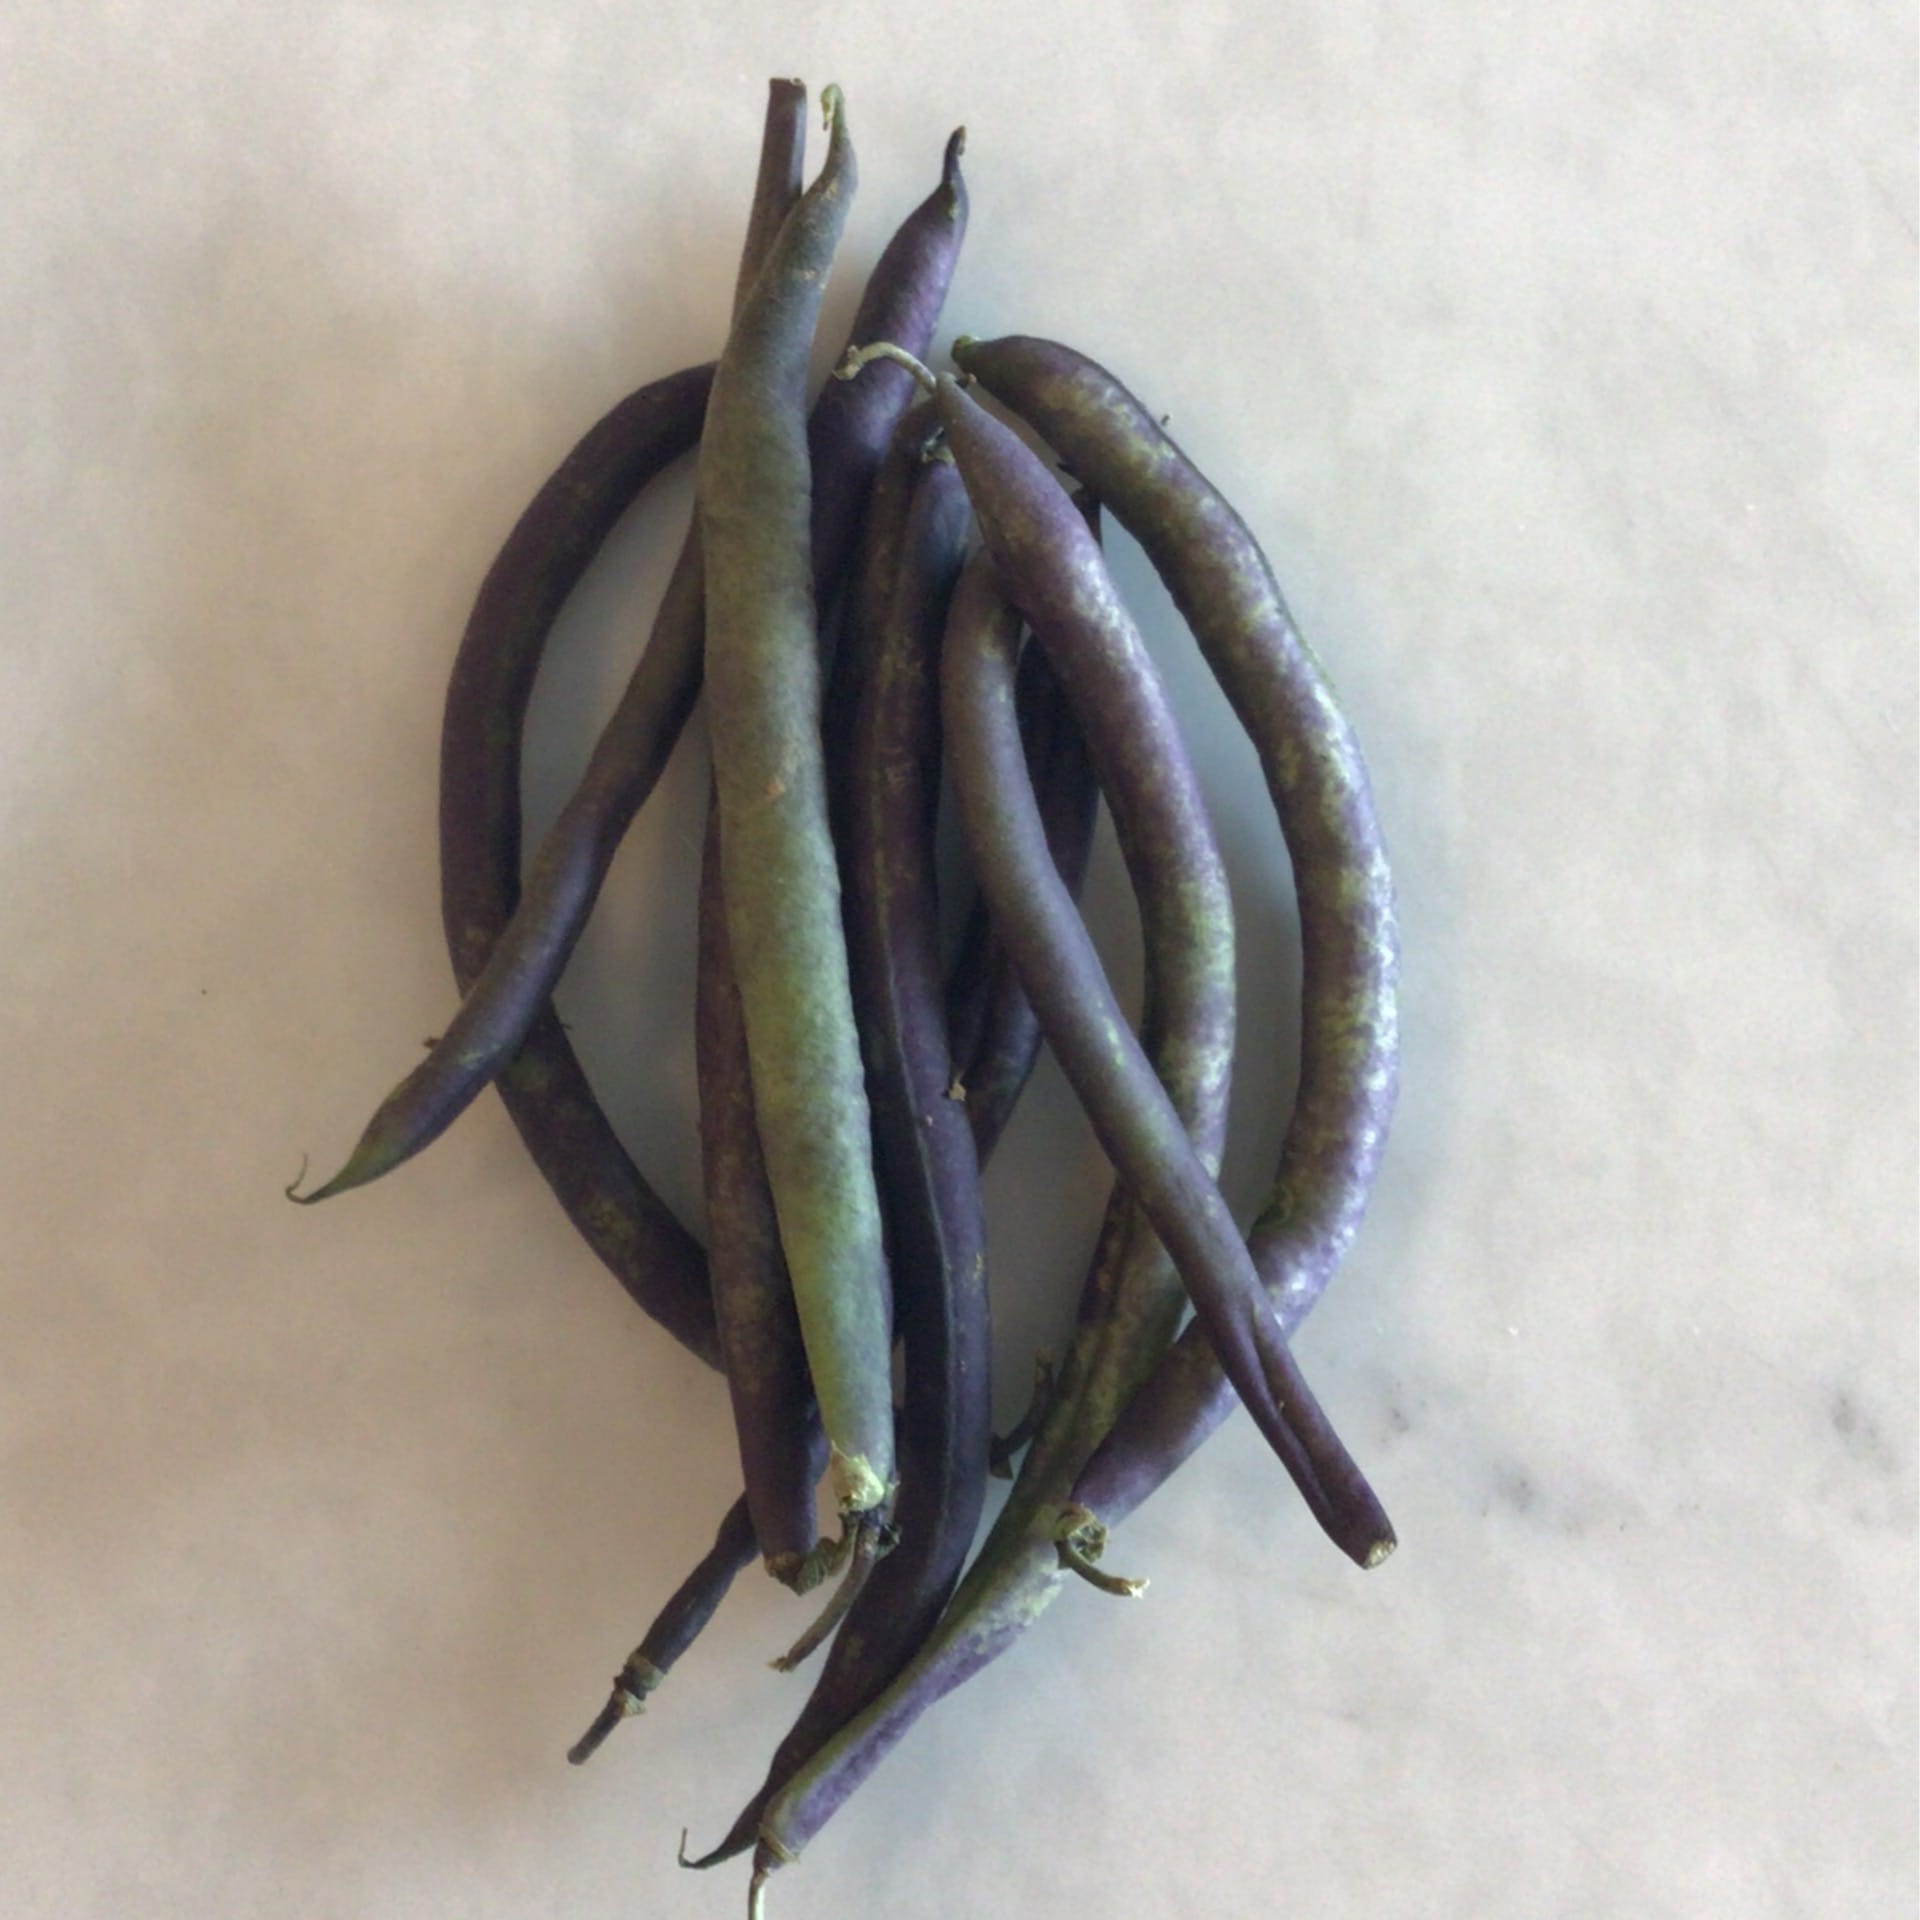 sold out sale purple beans